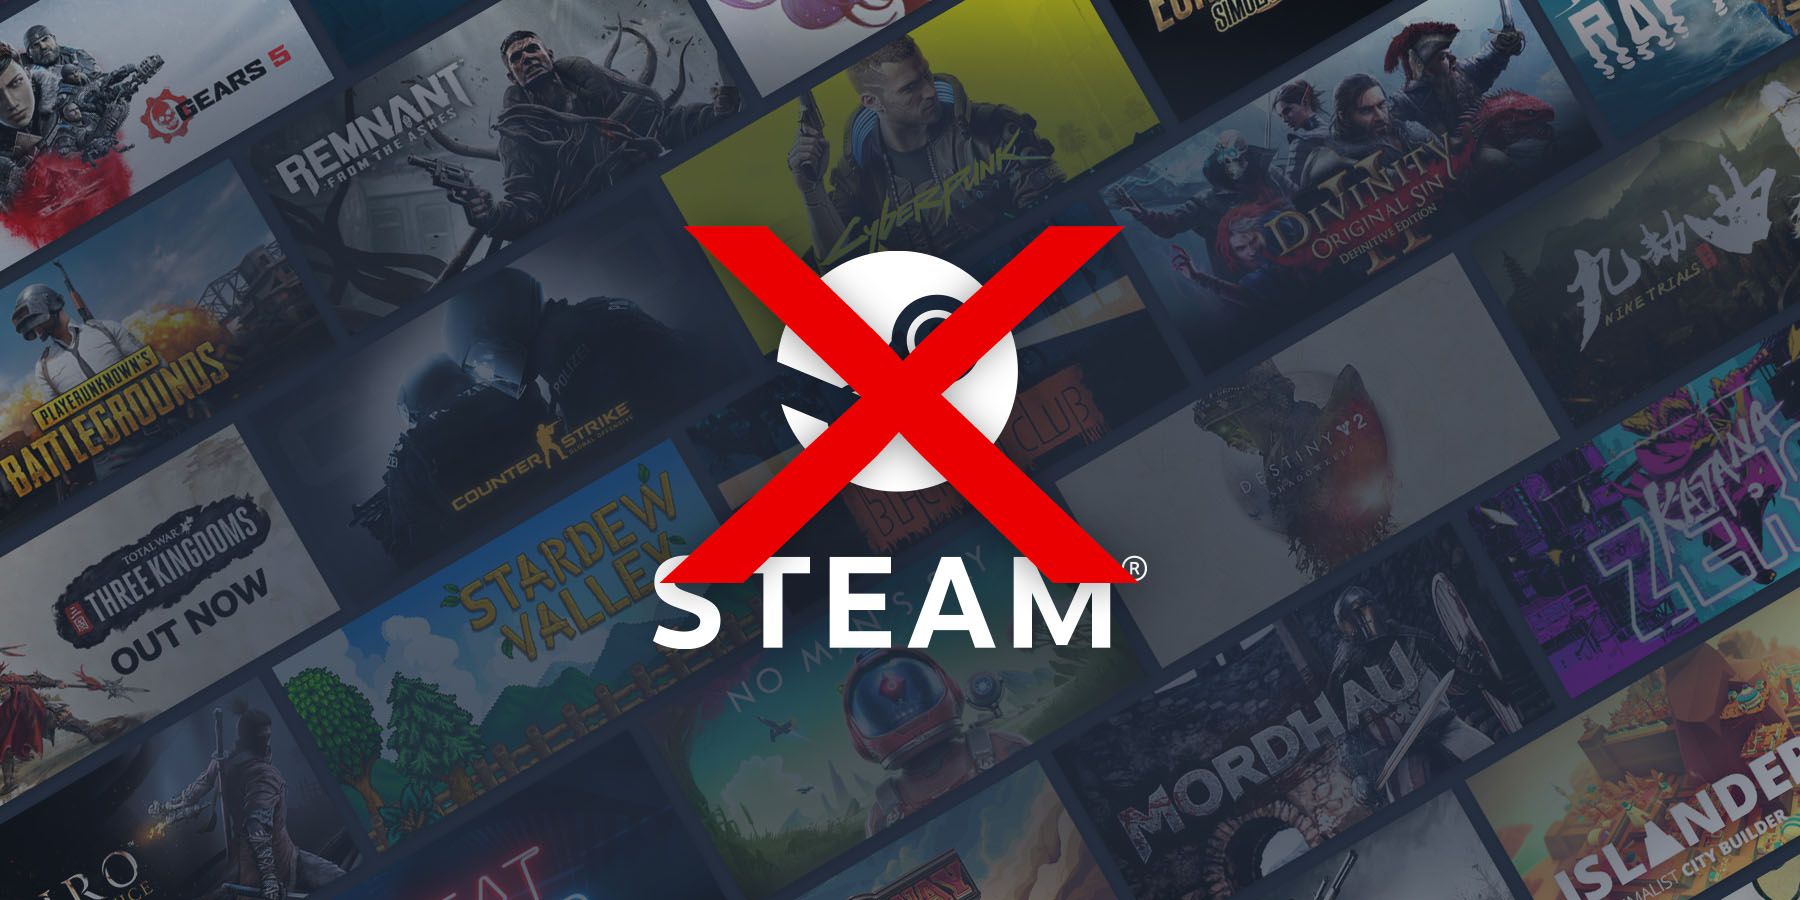 Will Alan Wake 2 Release on Steam? - Gameranx